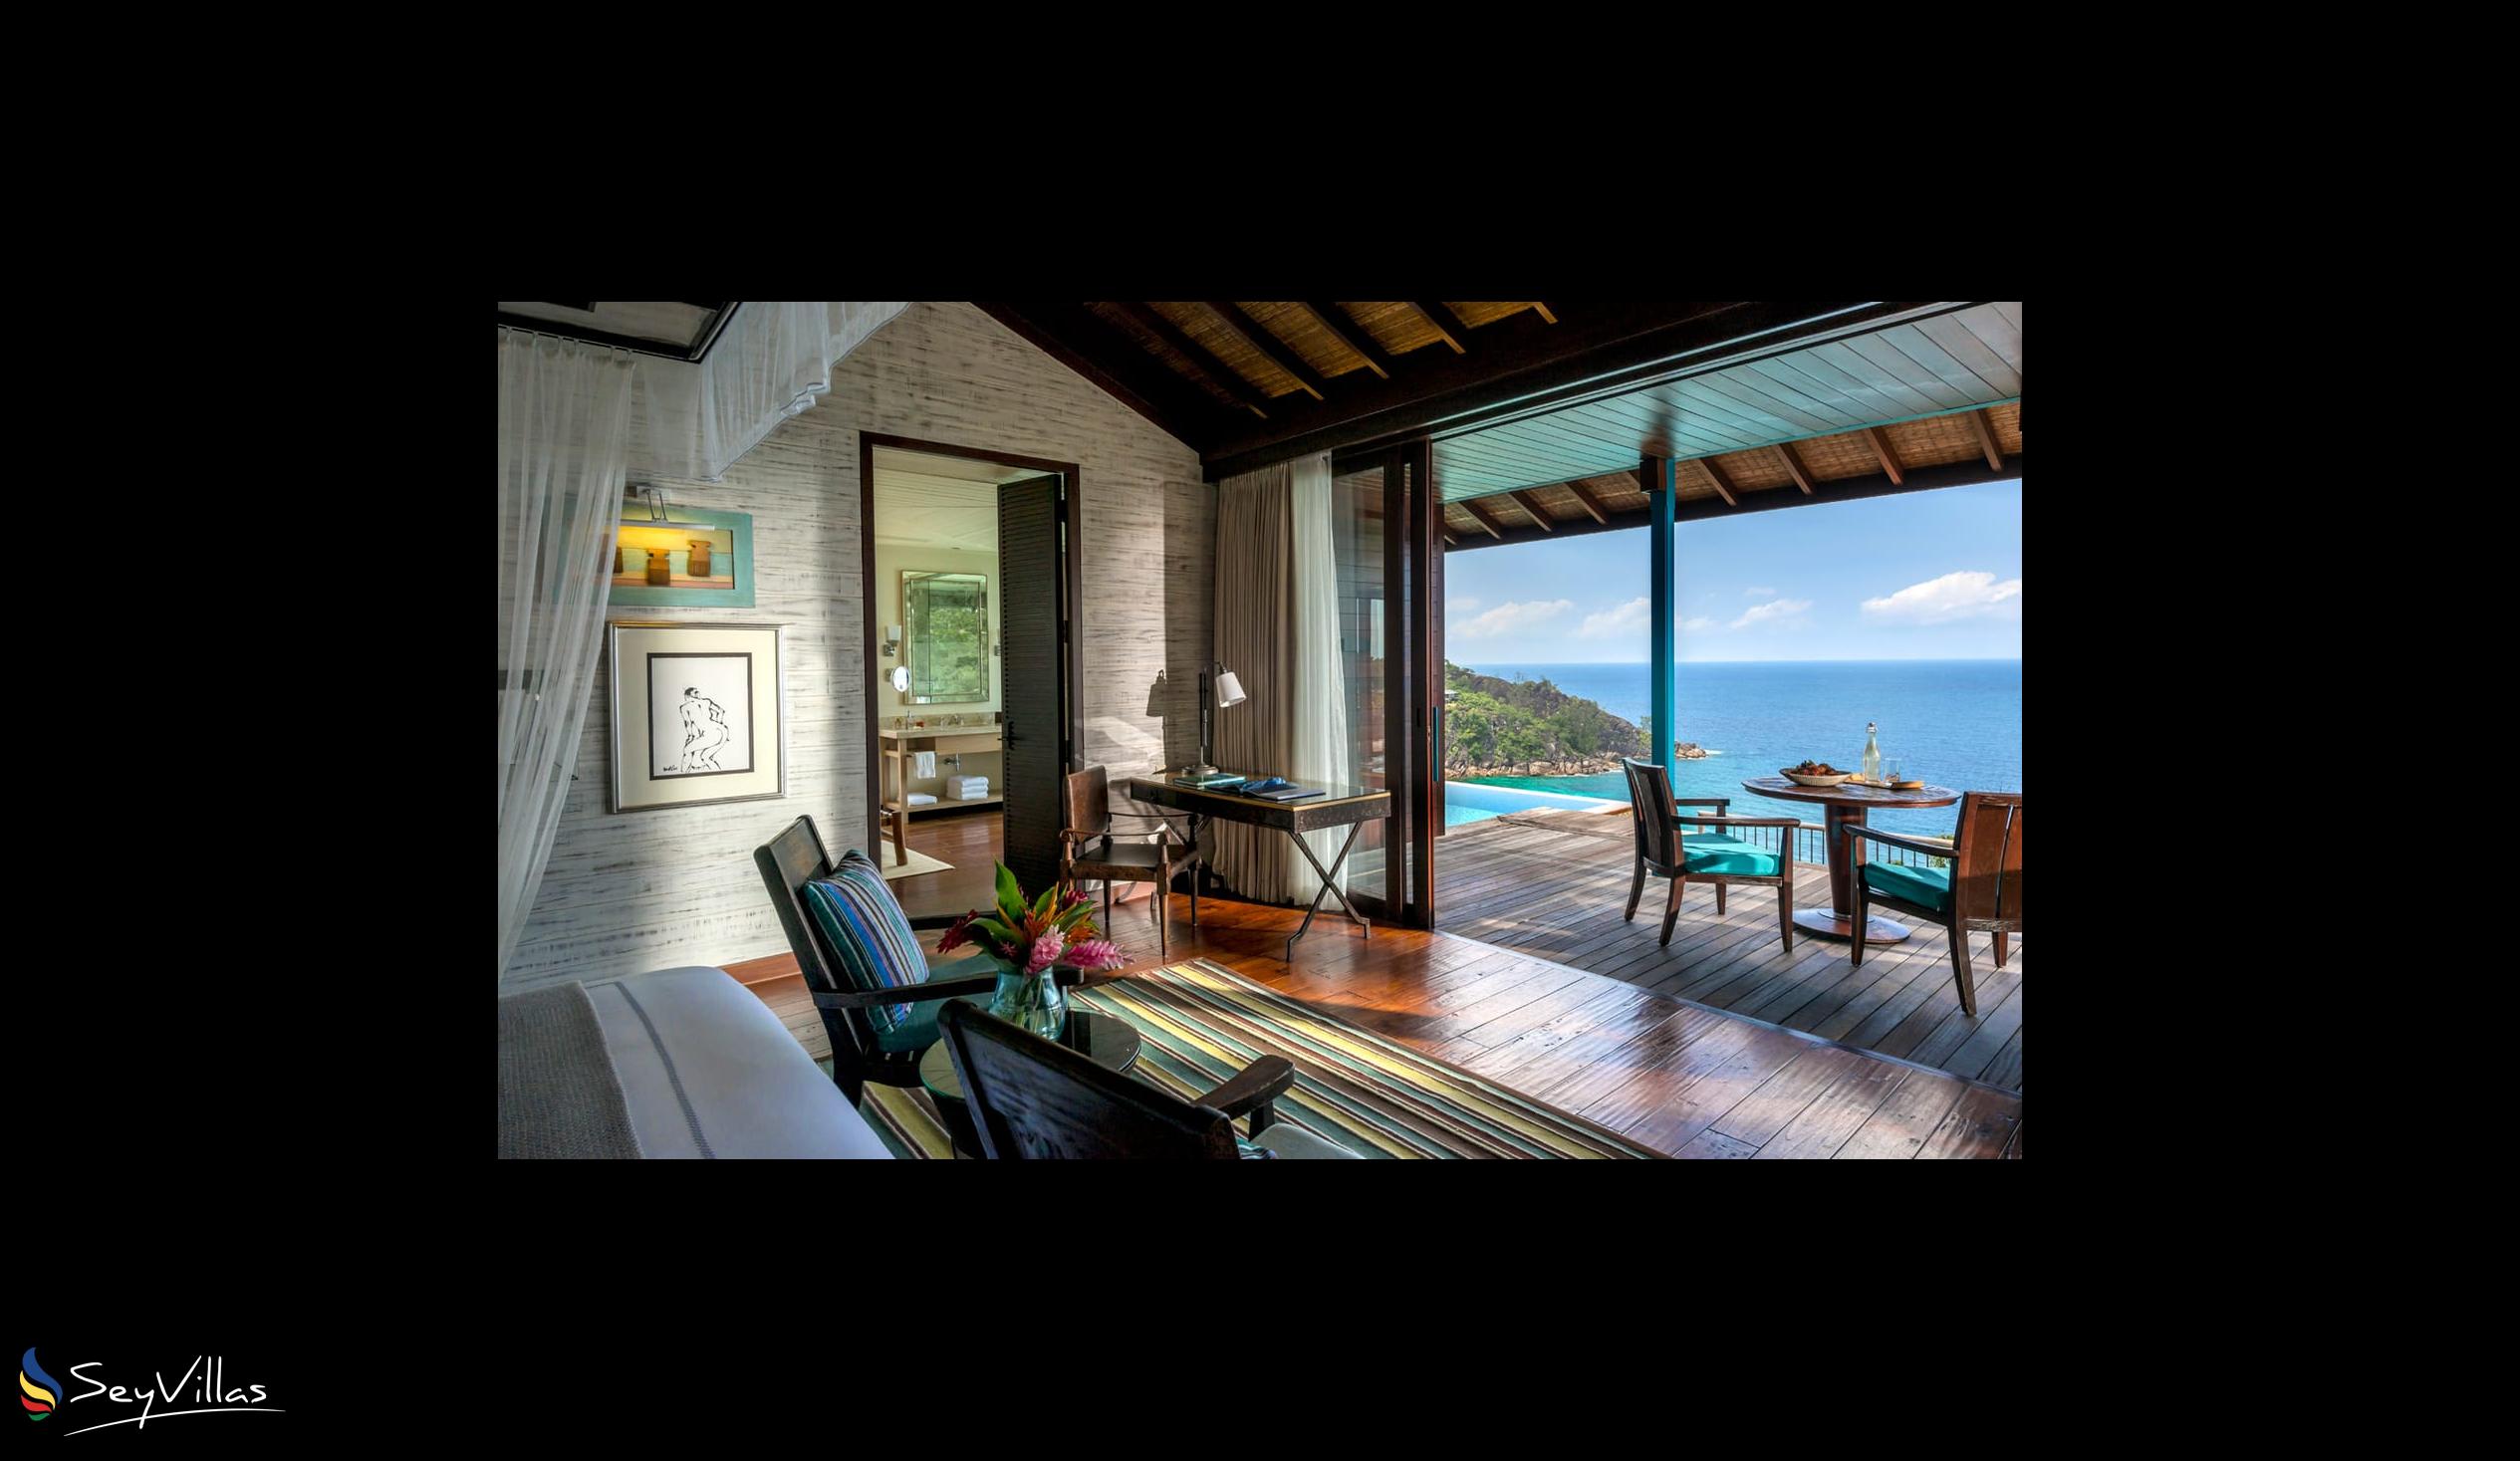 Foto 39: Four Seasons Resort - Hilltop Ocean View Villa - Mahé (Seychellen)